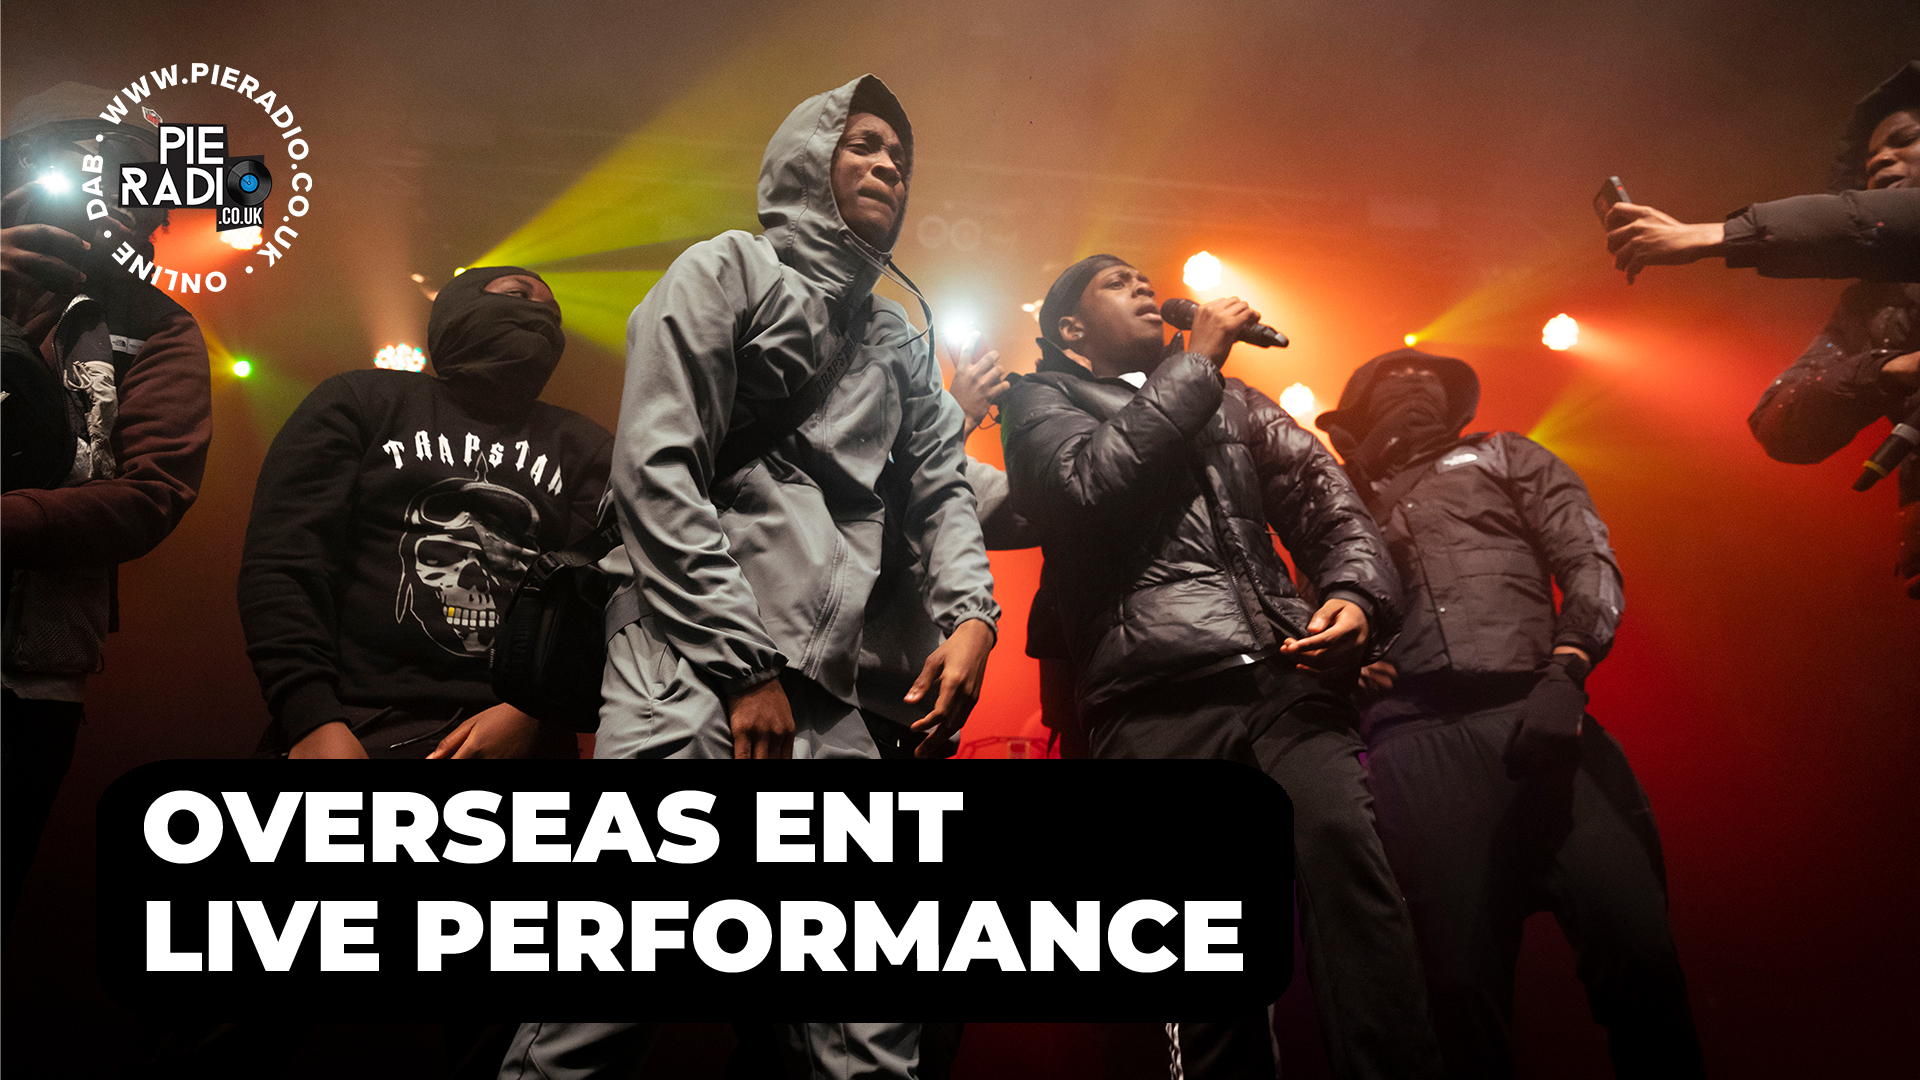 Overseas Ent Live Performance Da Beatfreakz Headline Show At Manchester Academy